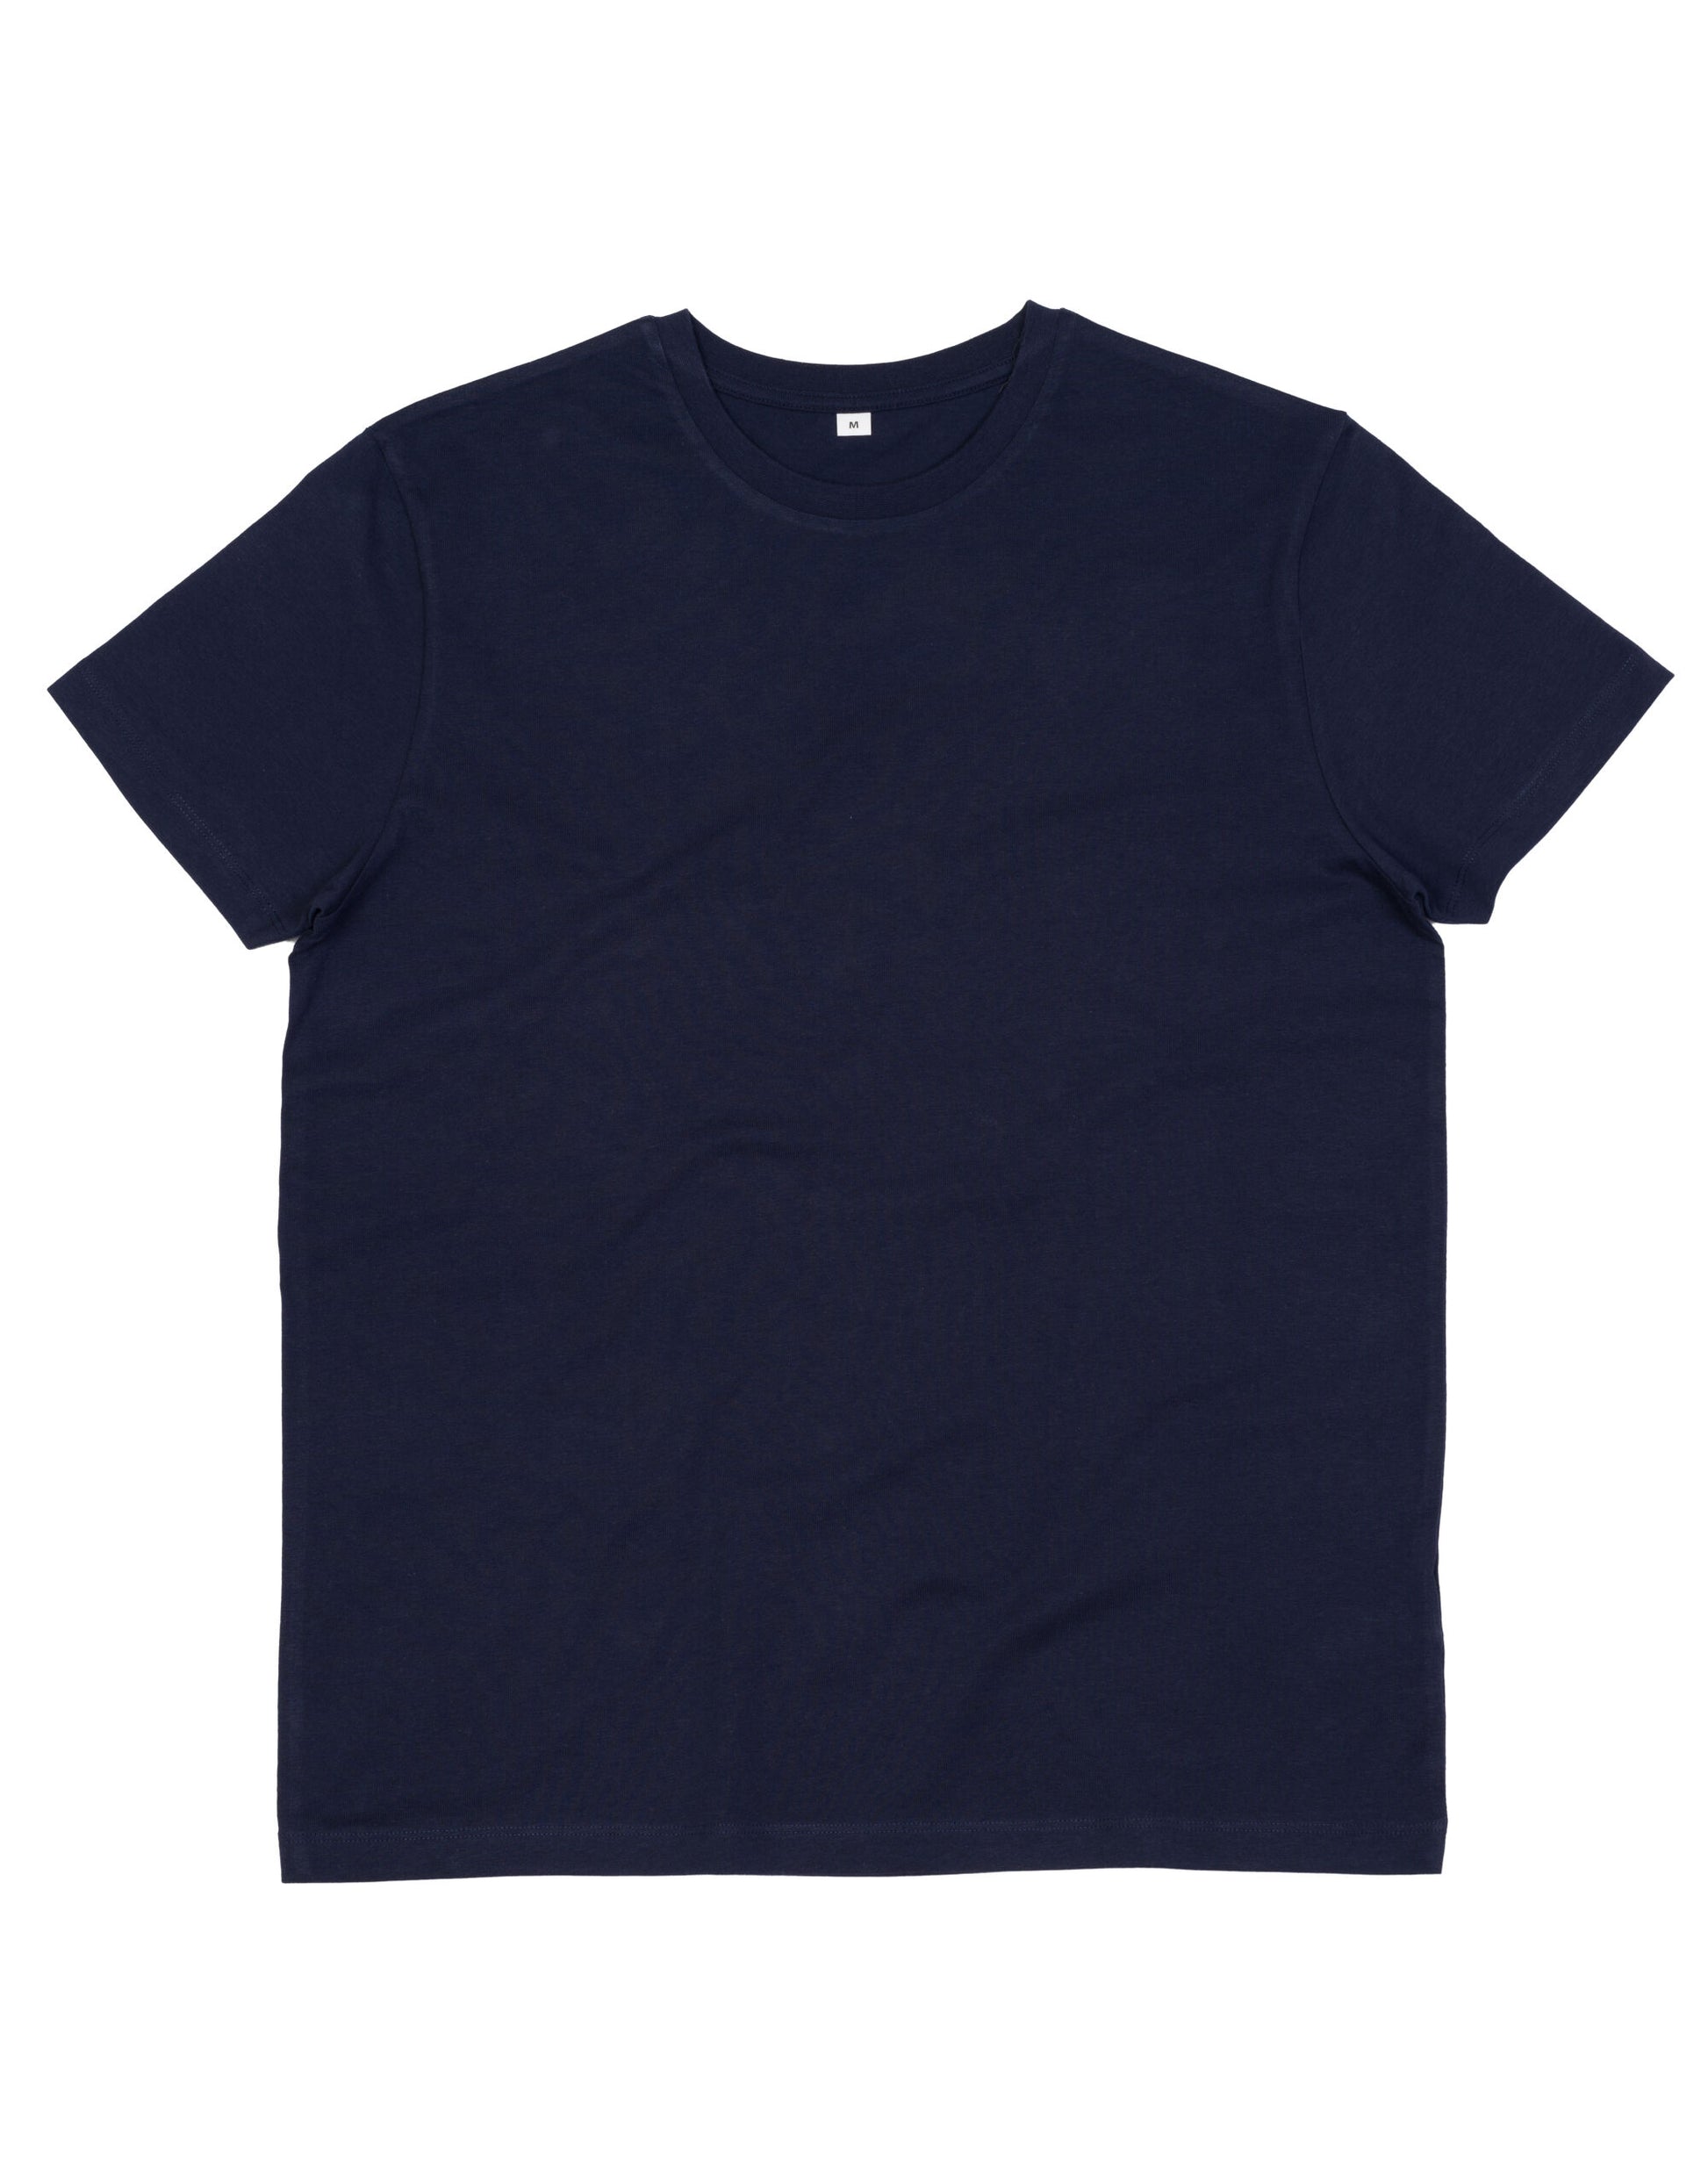 Men's Essential T-Shirt Main color - COOZO